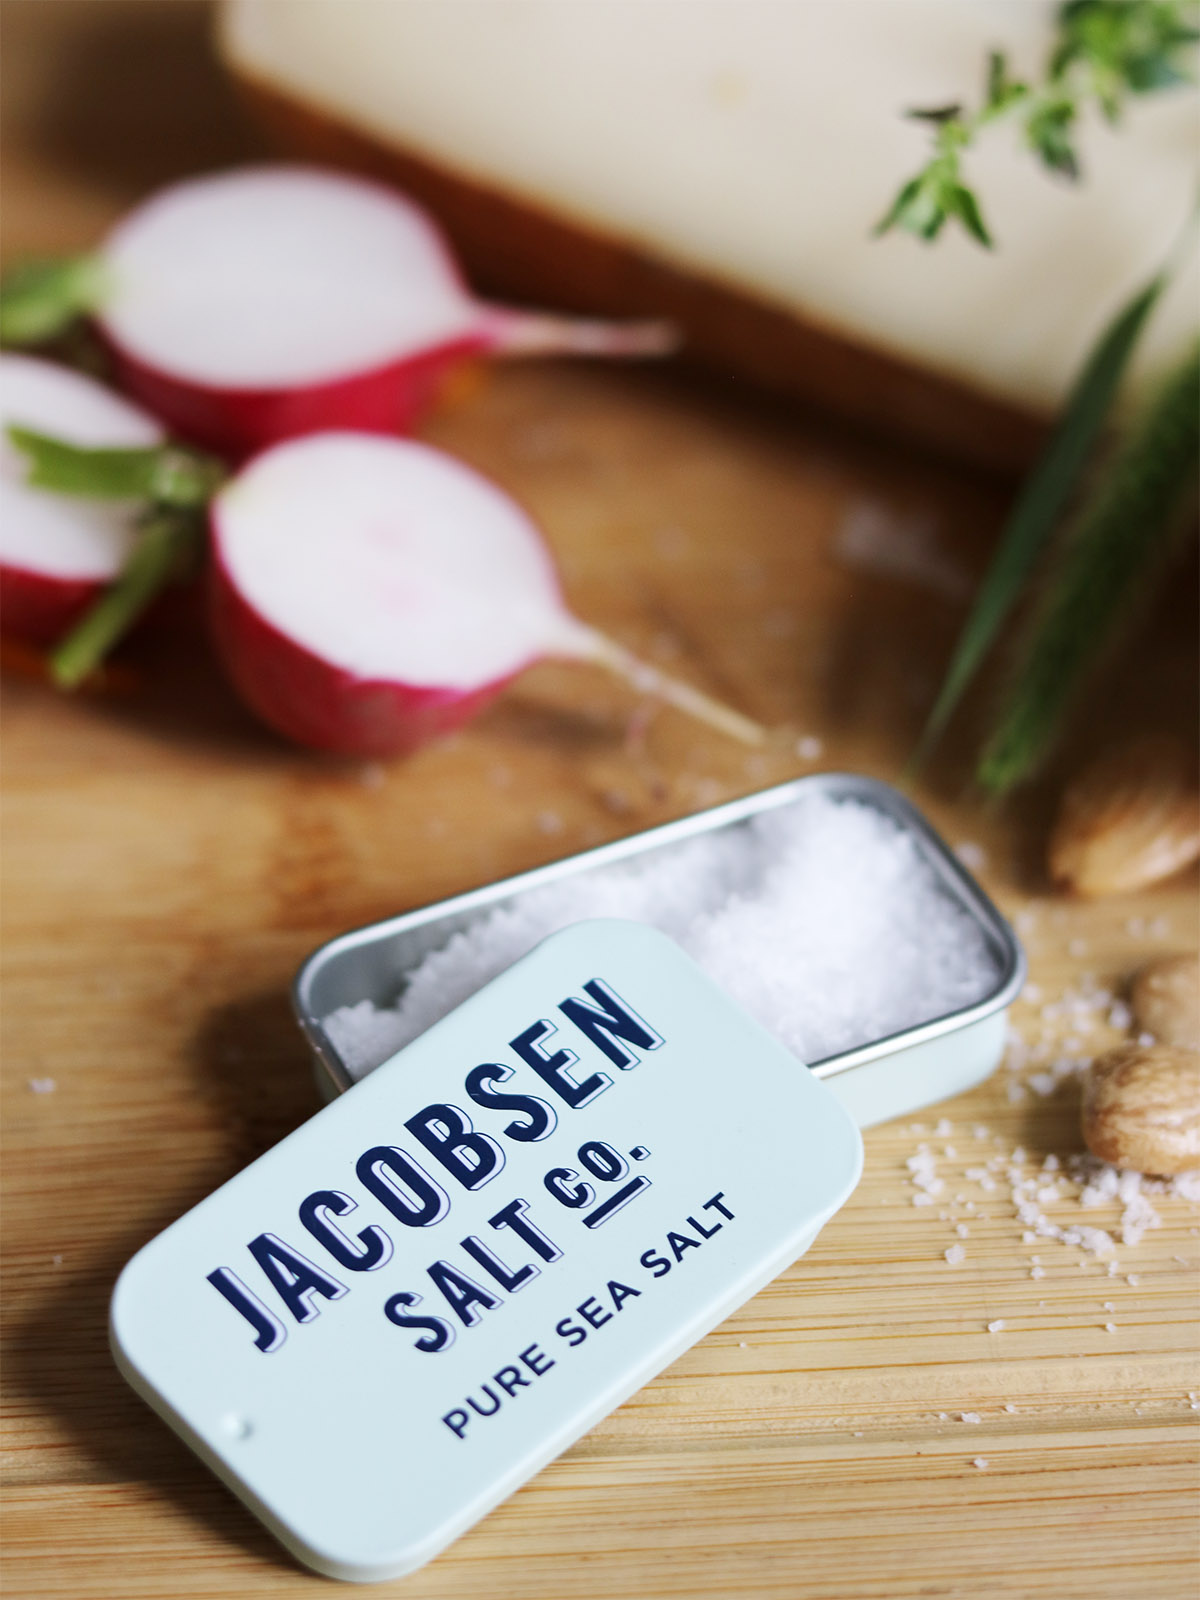 Hand-Harvested Pure Flake Finishing Salt, 4 oz, Jacobsen Salt Co.